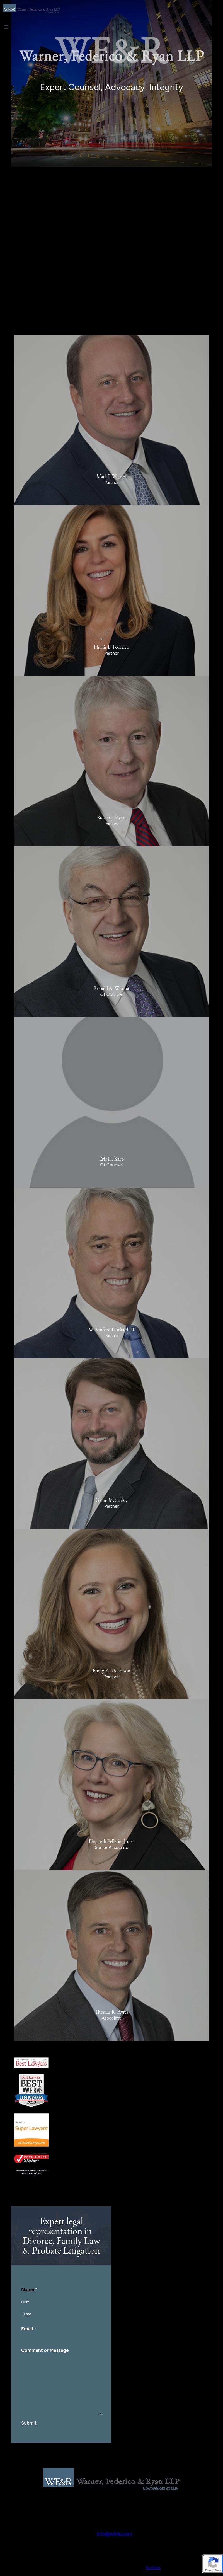 Witmer, Karp, Warner & Ryan LLP - Boston MA Lawyers